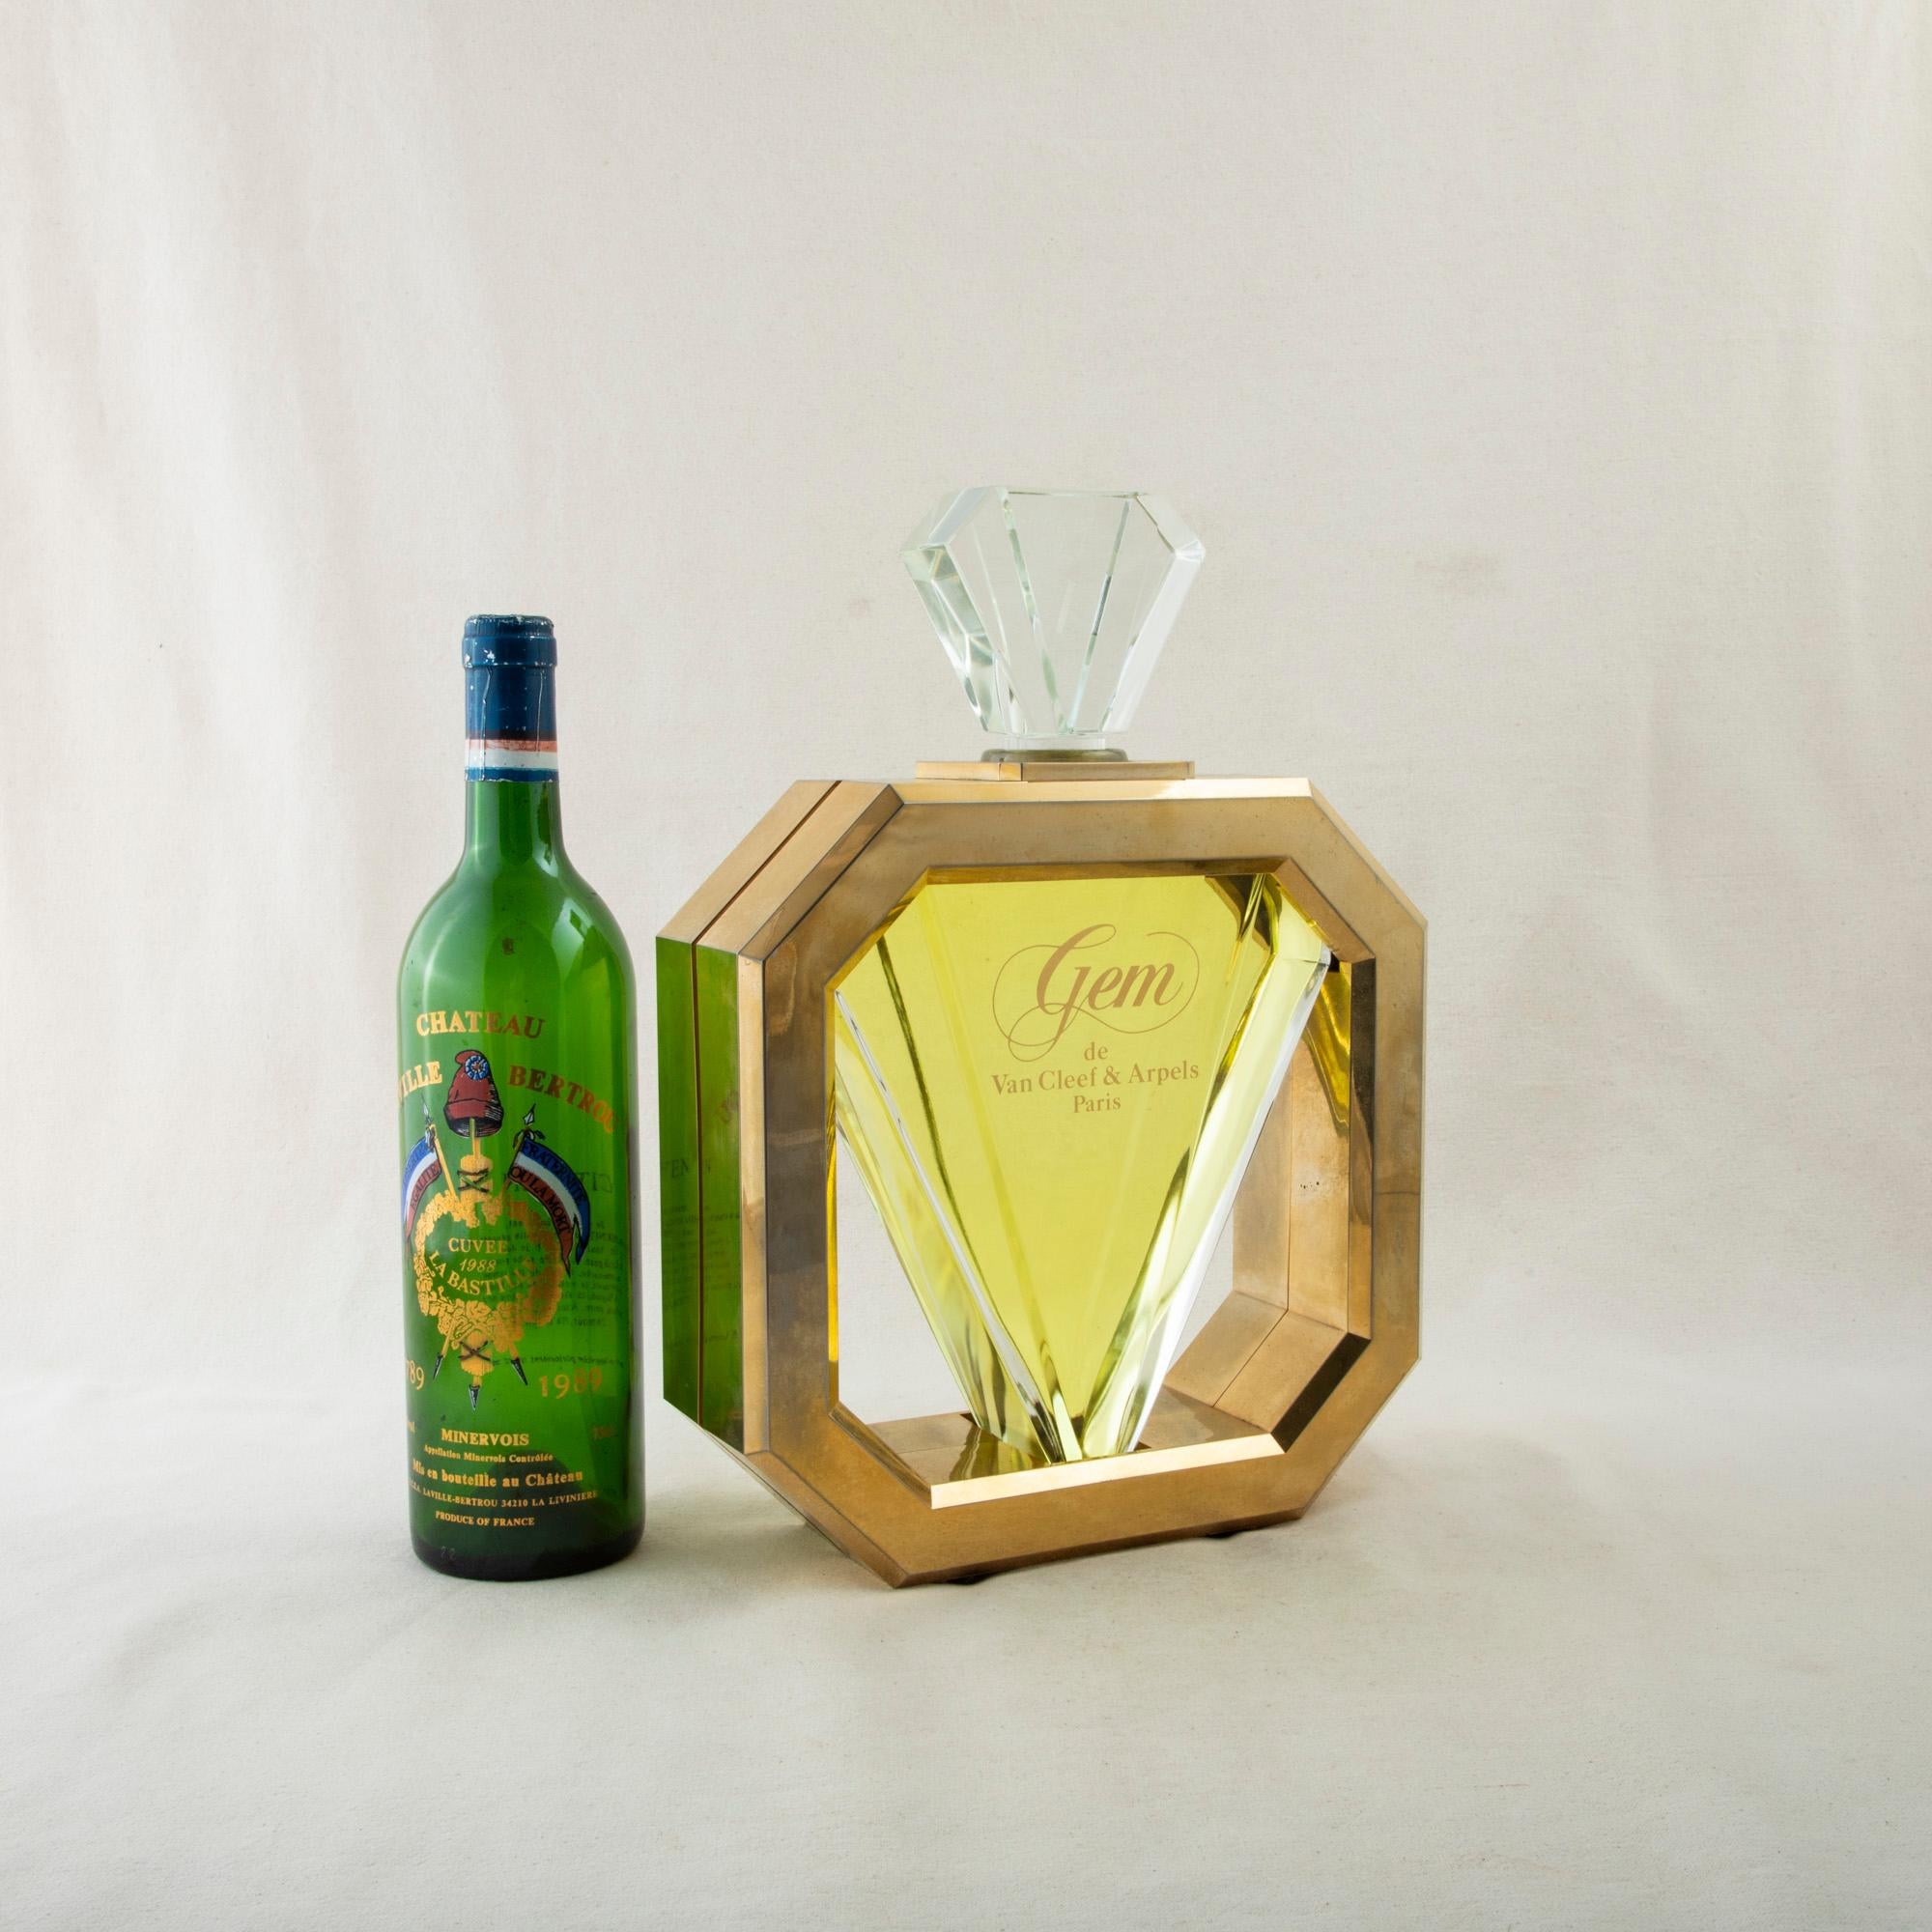 Large Scale 20th Century French Gem de Van Cleef & Arpels Perfume Factice 4